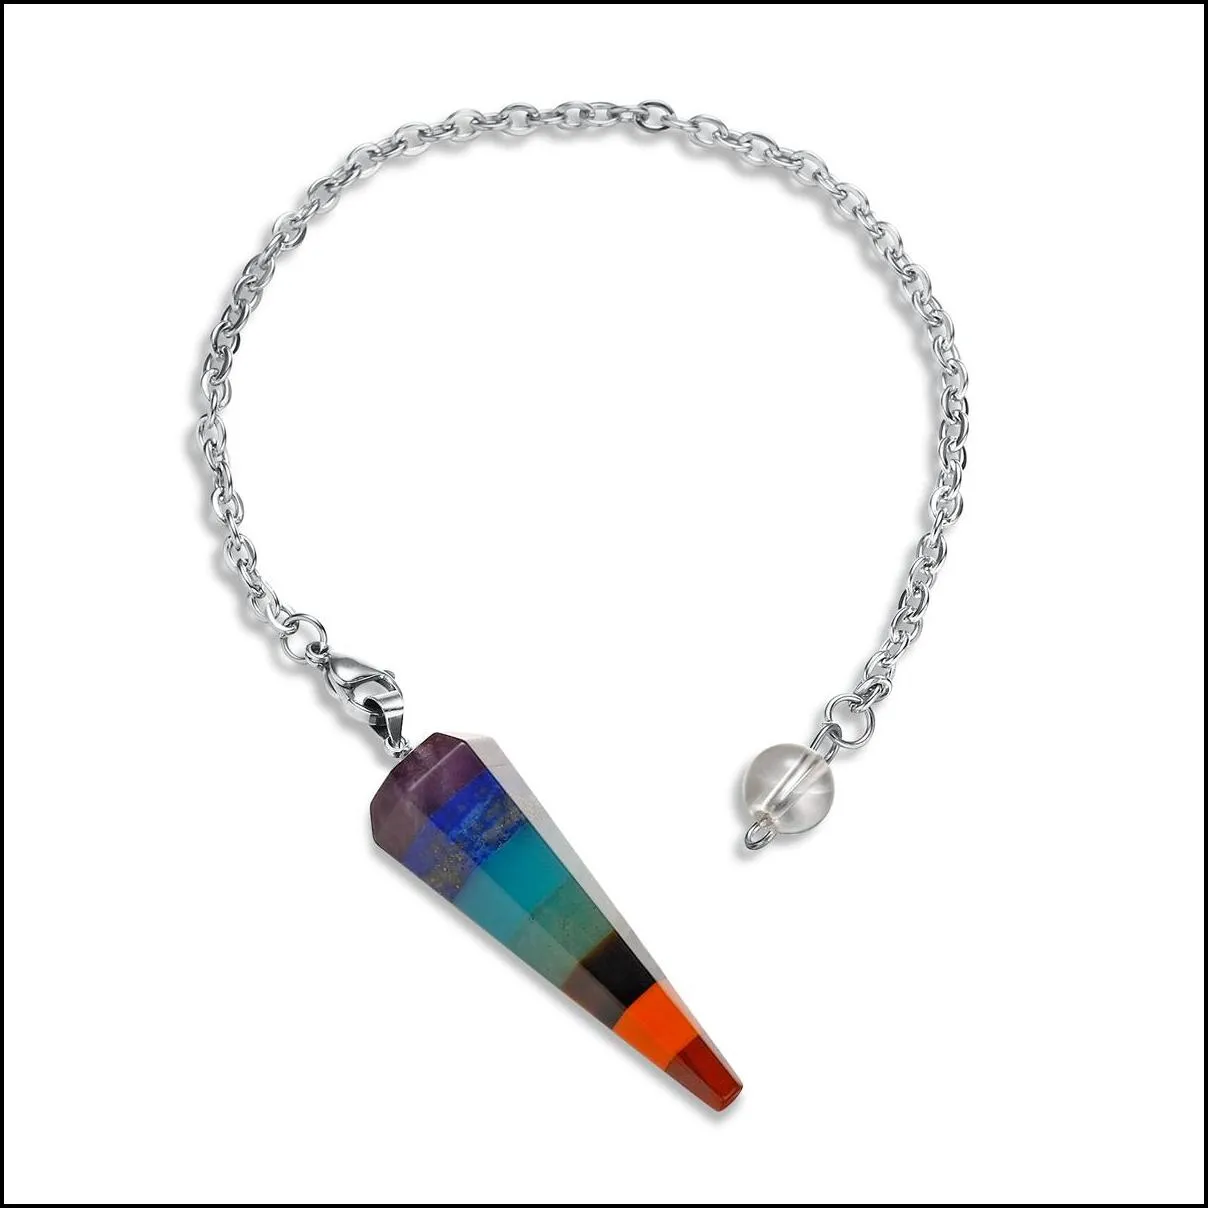 7 chakra stone yoga necklace raw quartz natural stones dowsing pendulum necklaces reiki rainbow jewelry womans gift